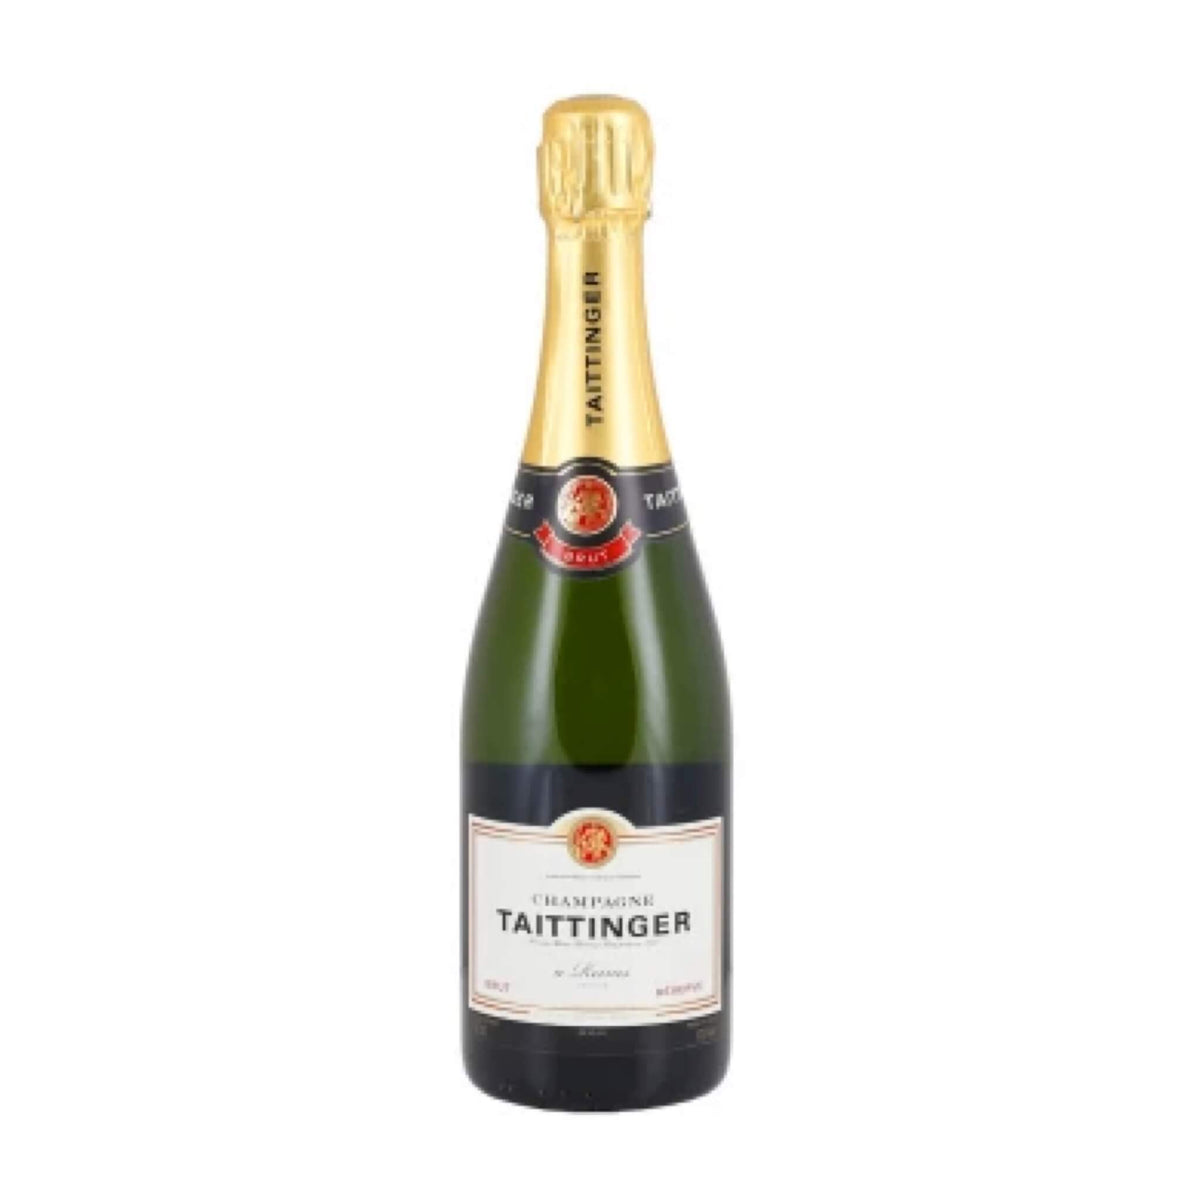 Champagne Taittinger-Champagner-Chardonnay, Pinot Noir-Taittinger Brut Reserve Champagne-WINECOM